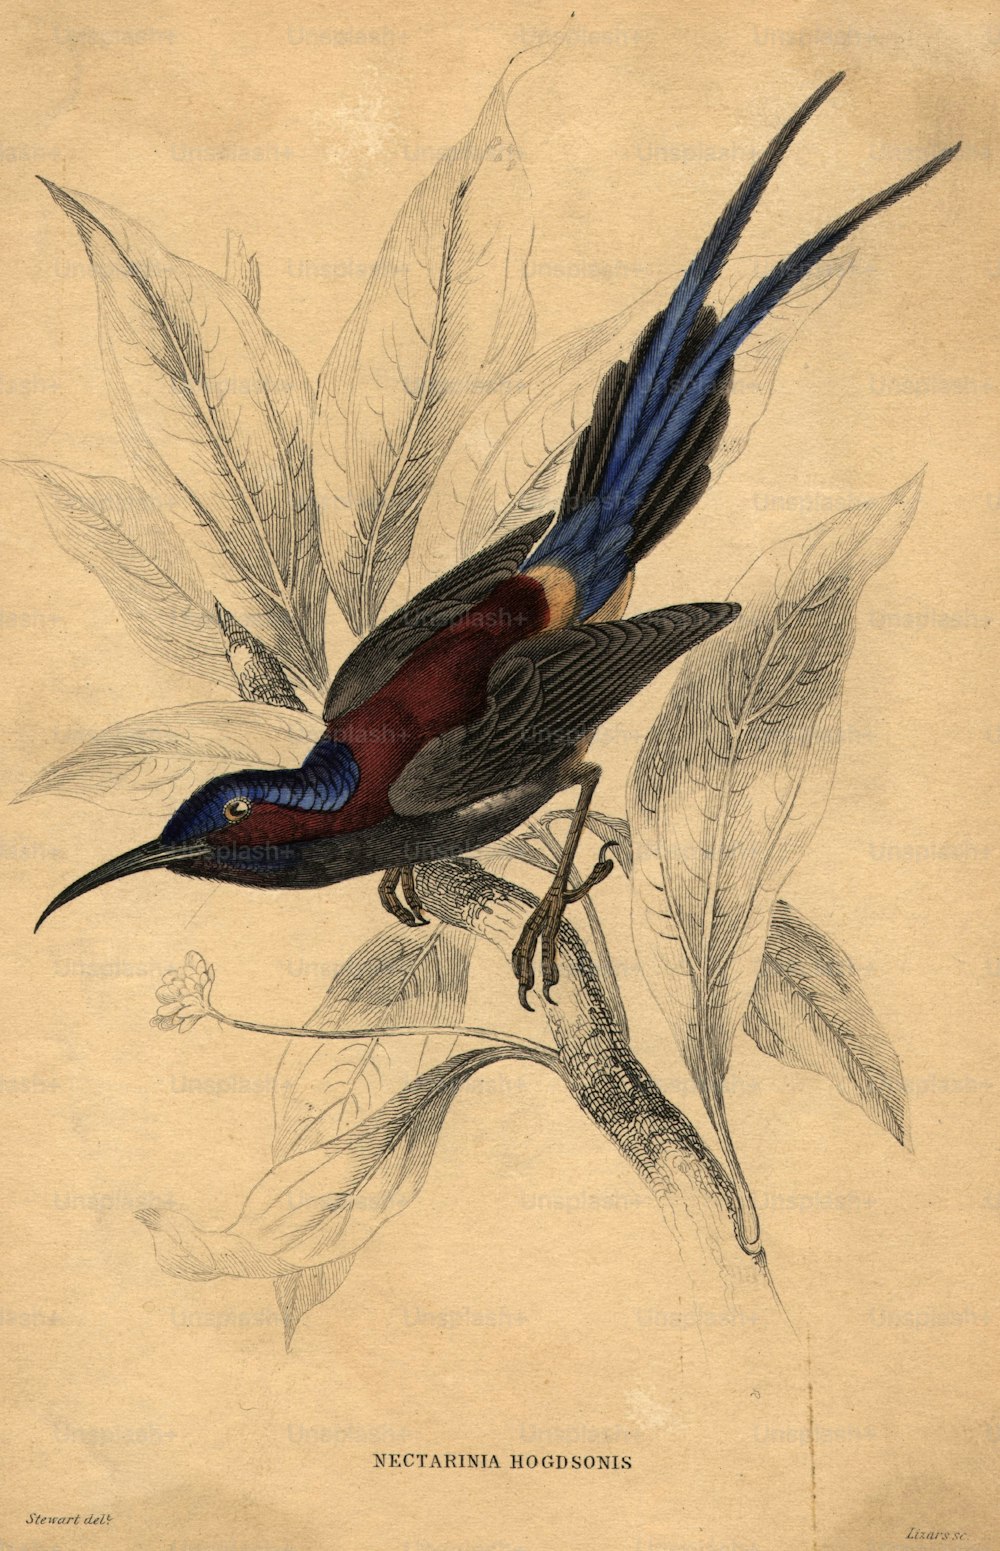 vers 1880 : Nectarinia hogdsonis, un type de colibri.  (Photo de Hulton Archive/Getty Images)